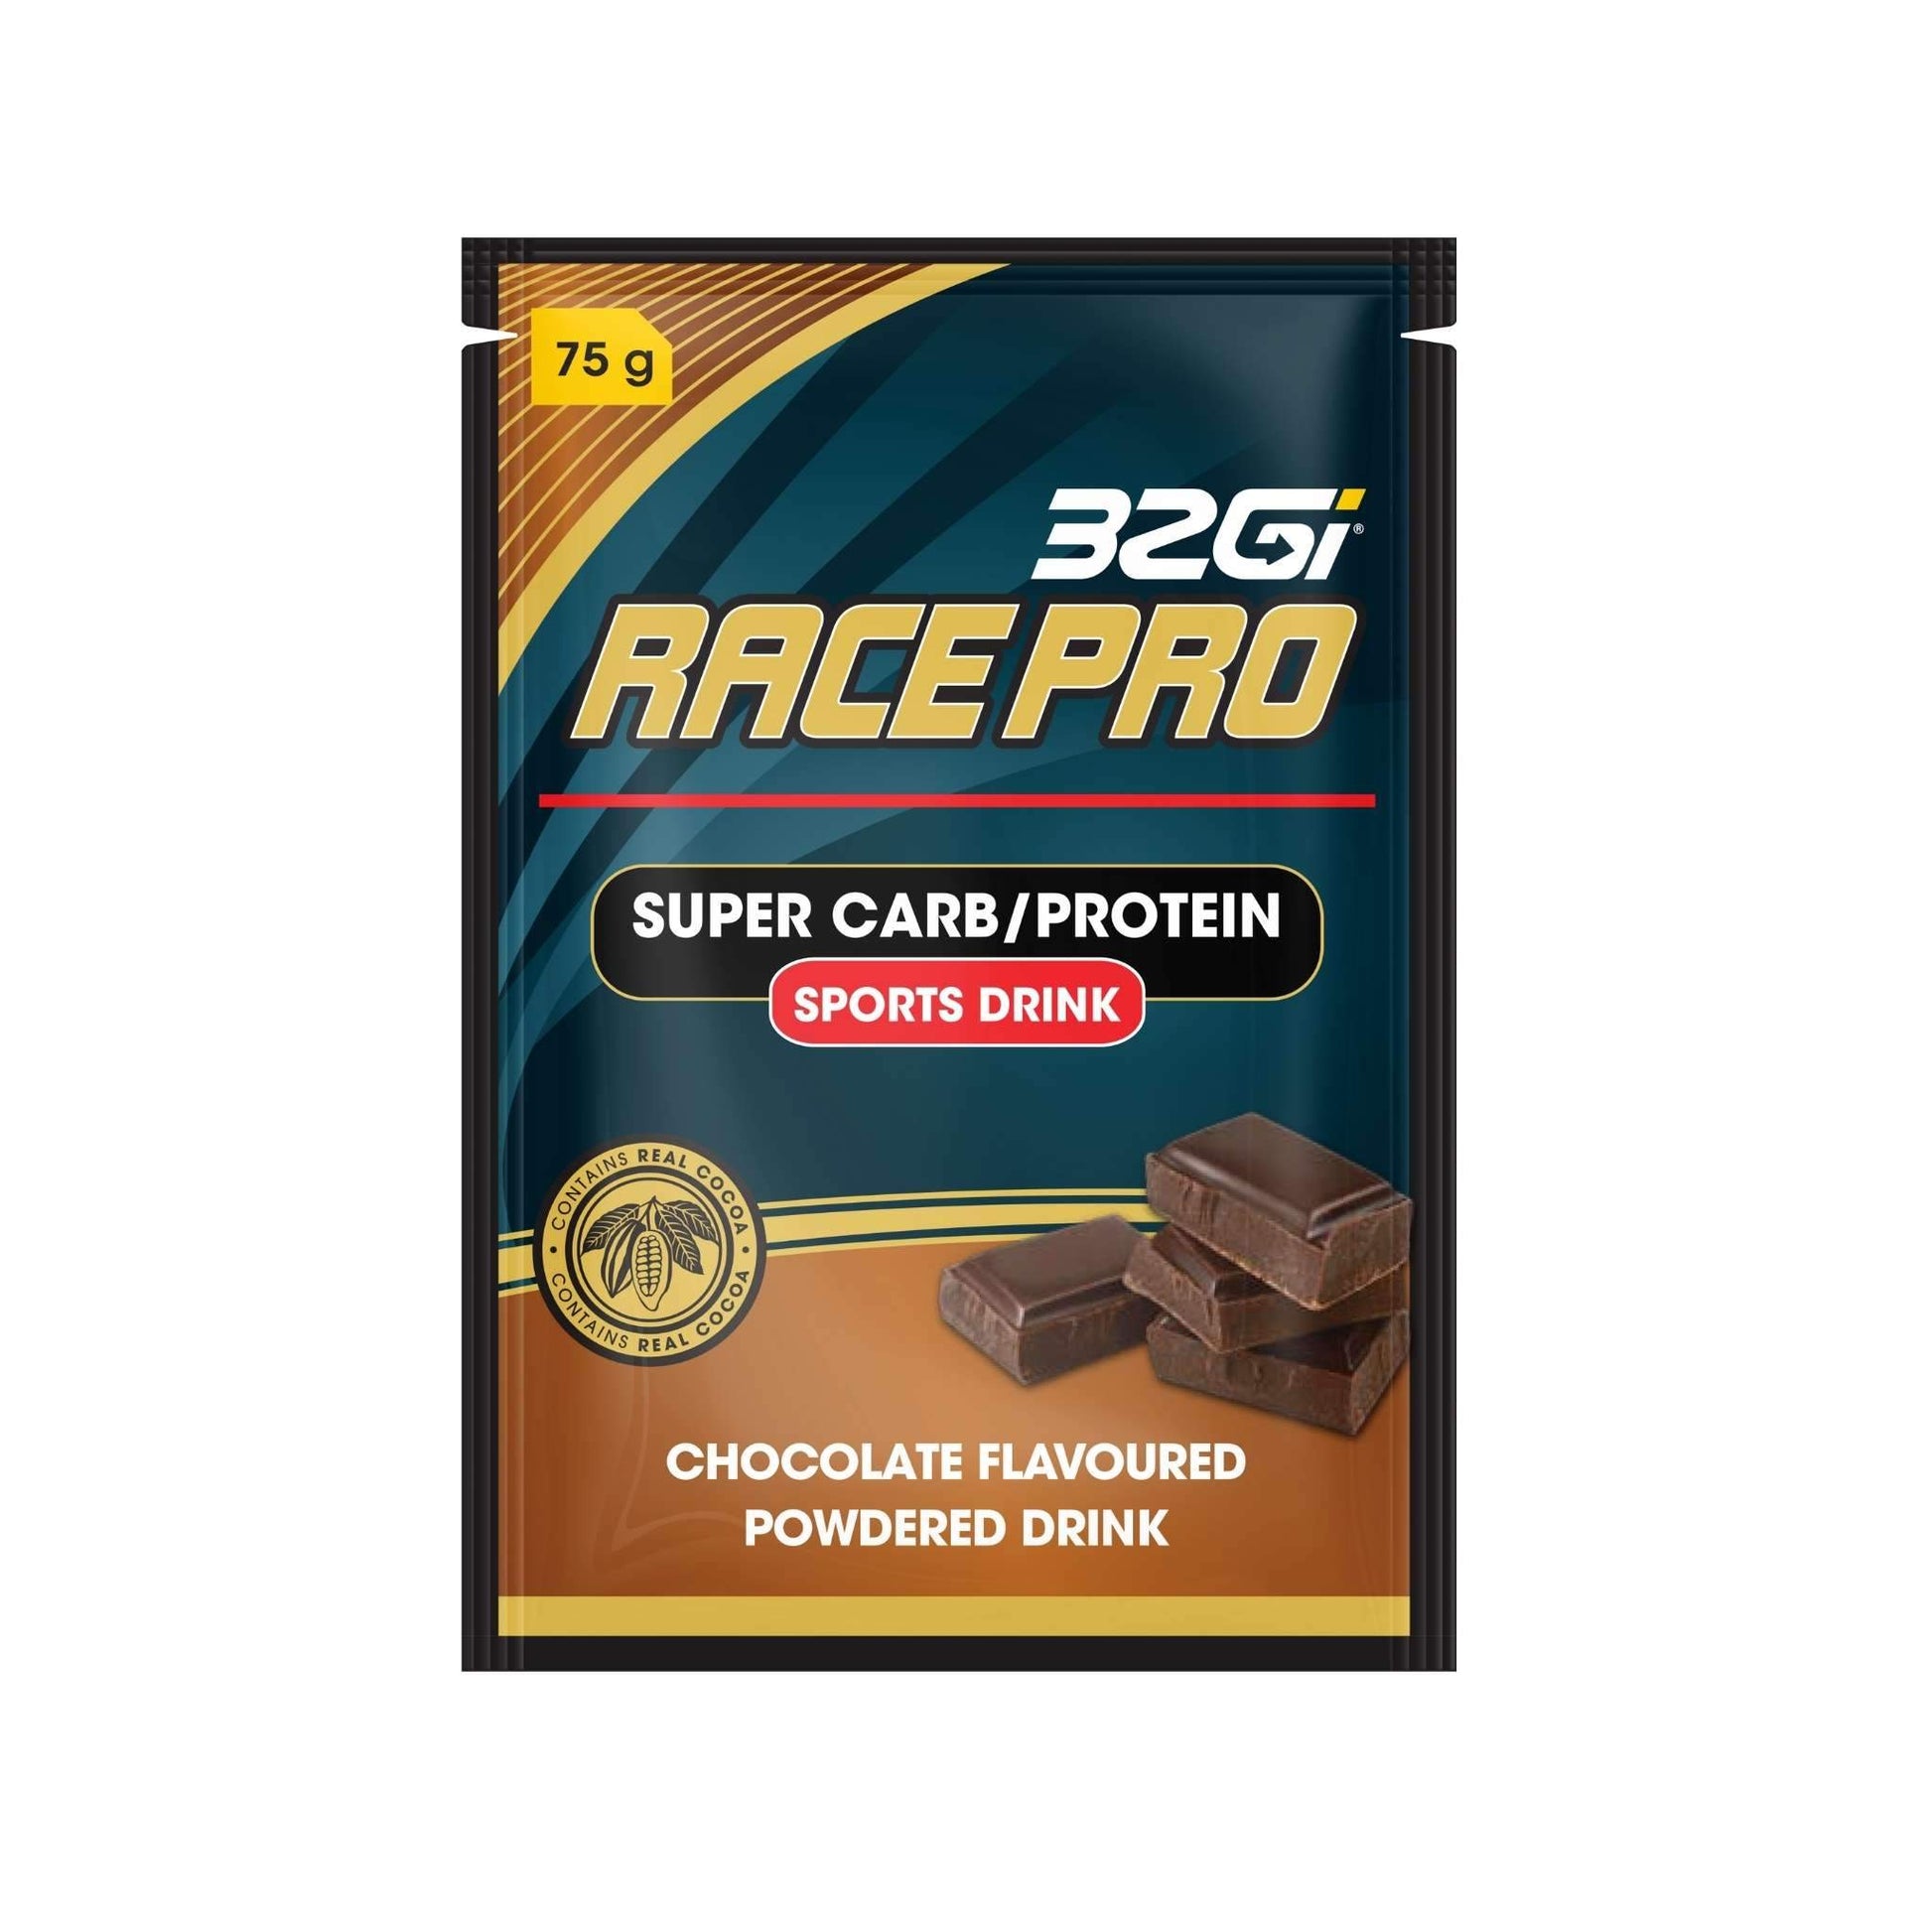 Race Pro - Super Carb/Protein Drink - 32Gi United Kingdom